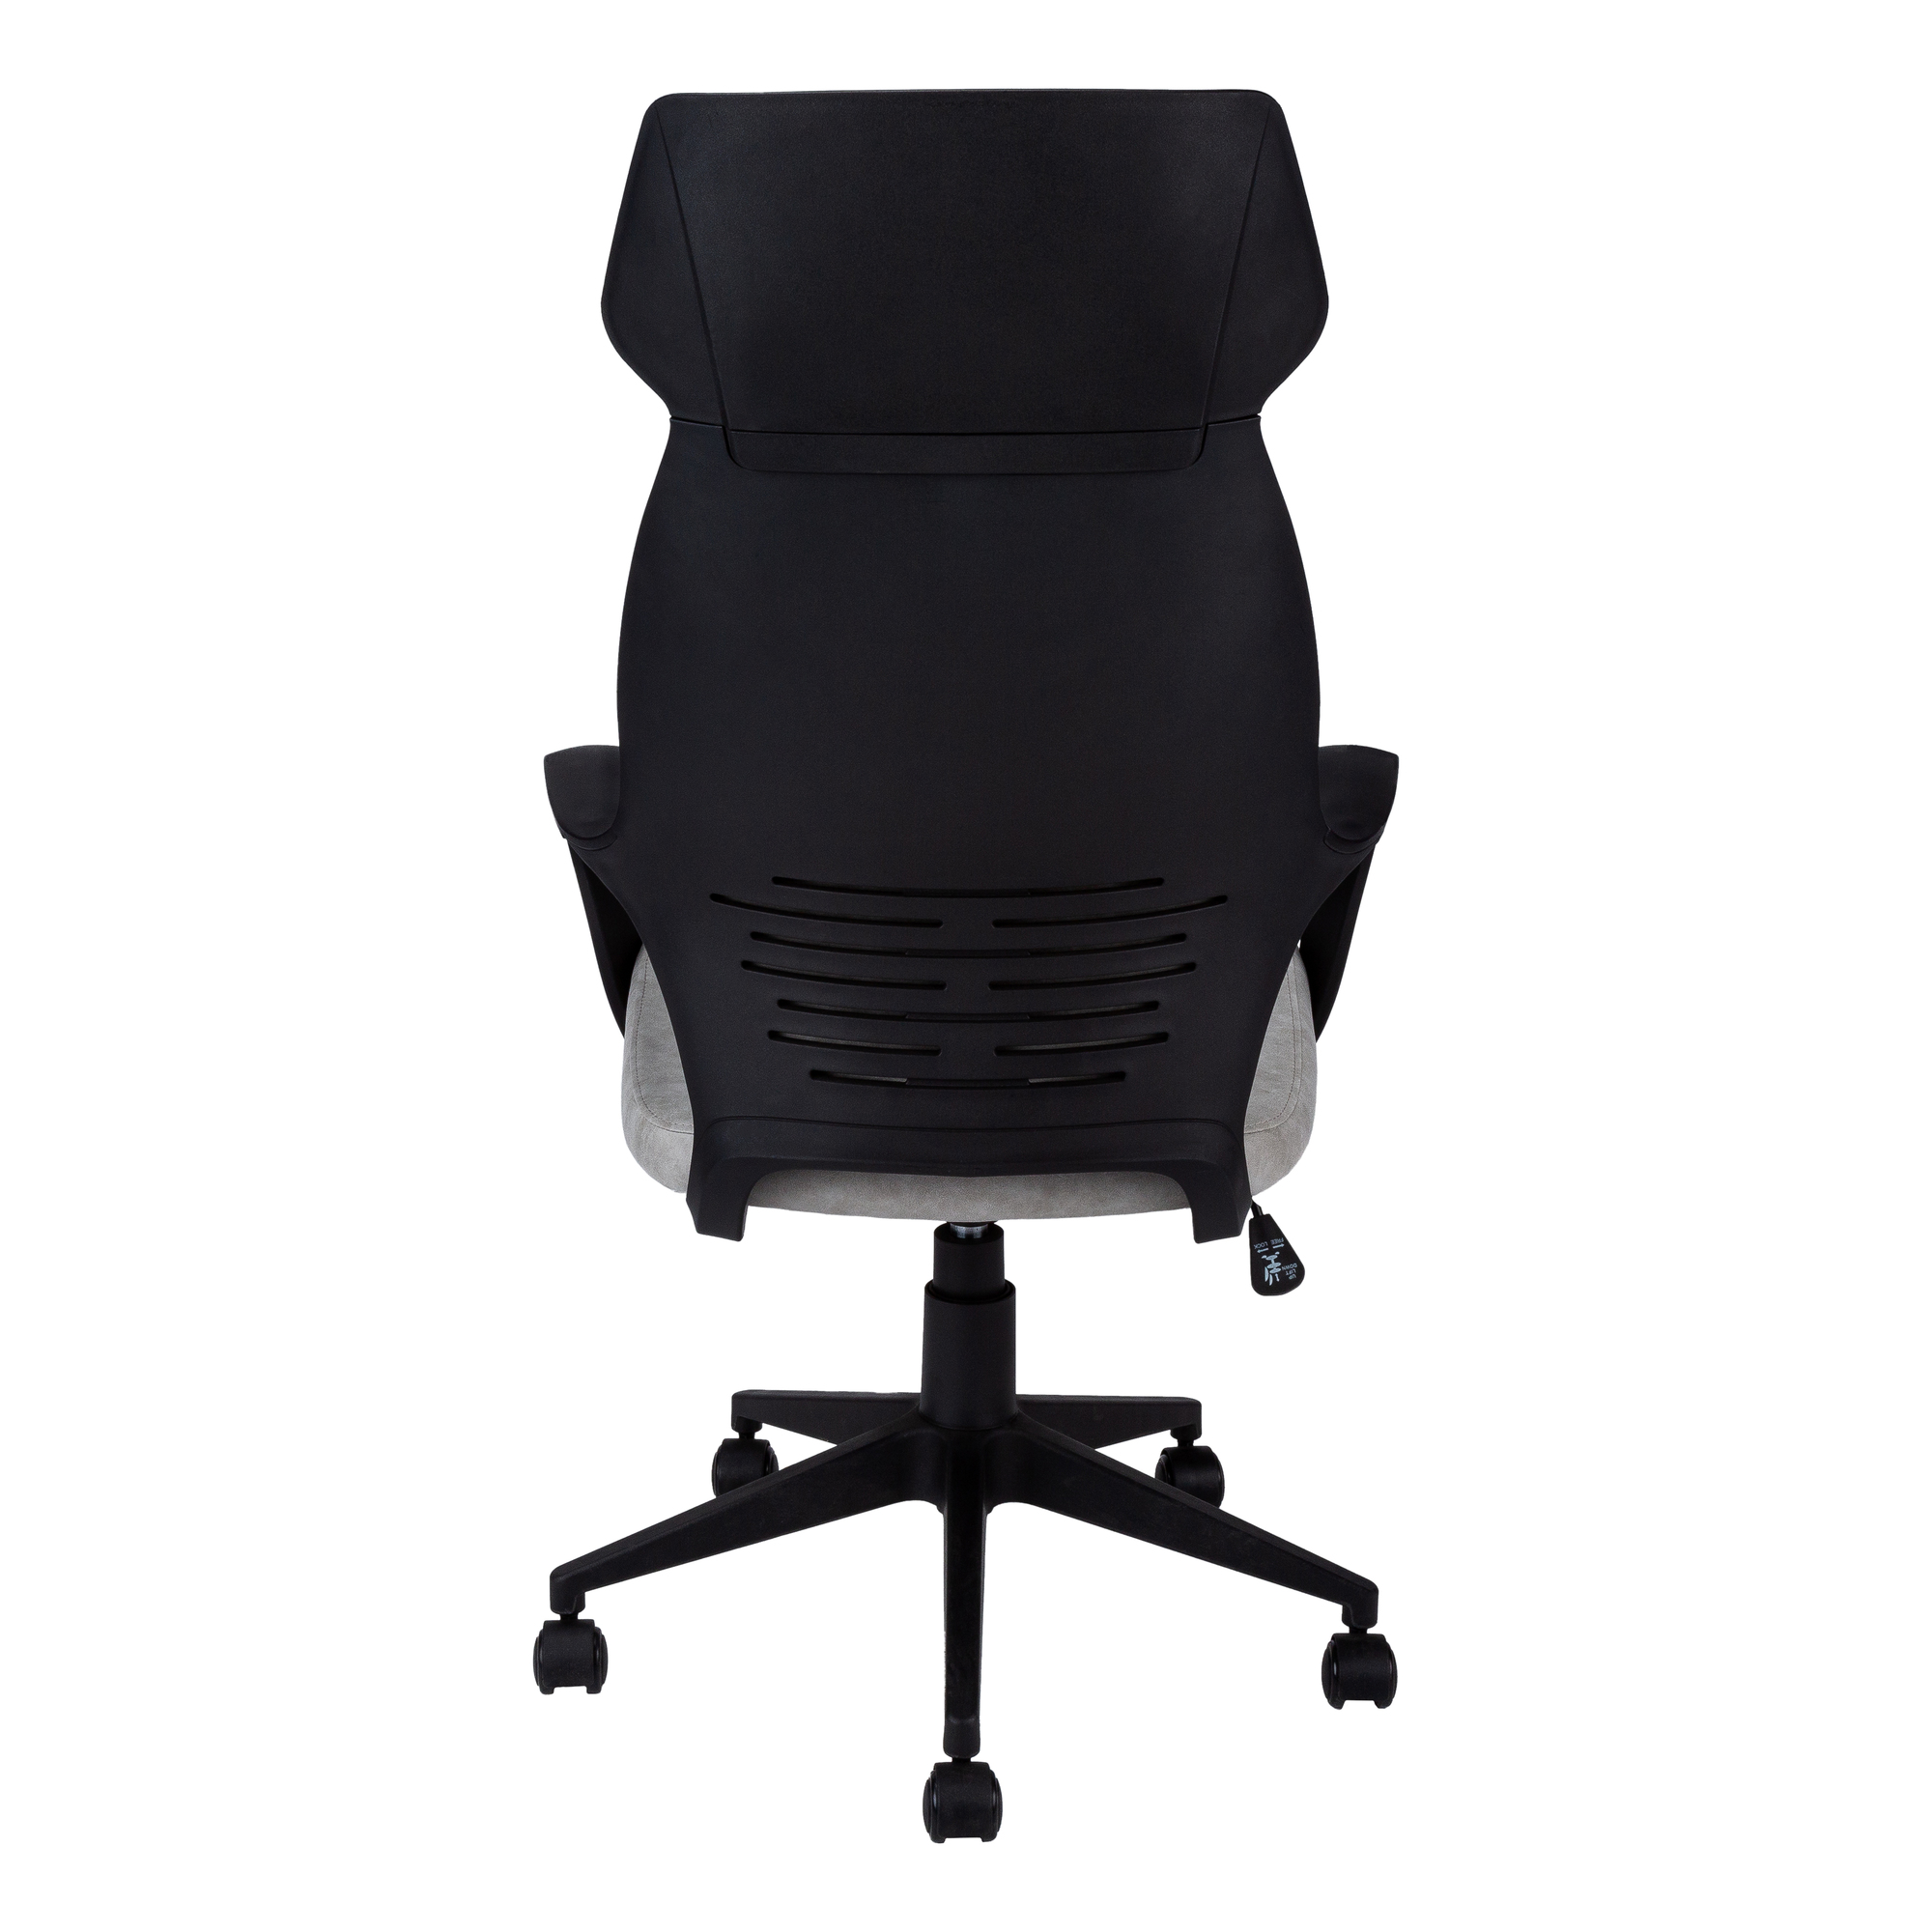 26" x 25" x 96" Grey Foam Polypropylene Microfiber High Back Office Chair